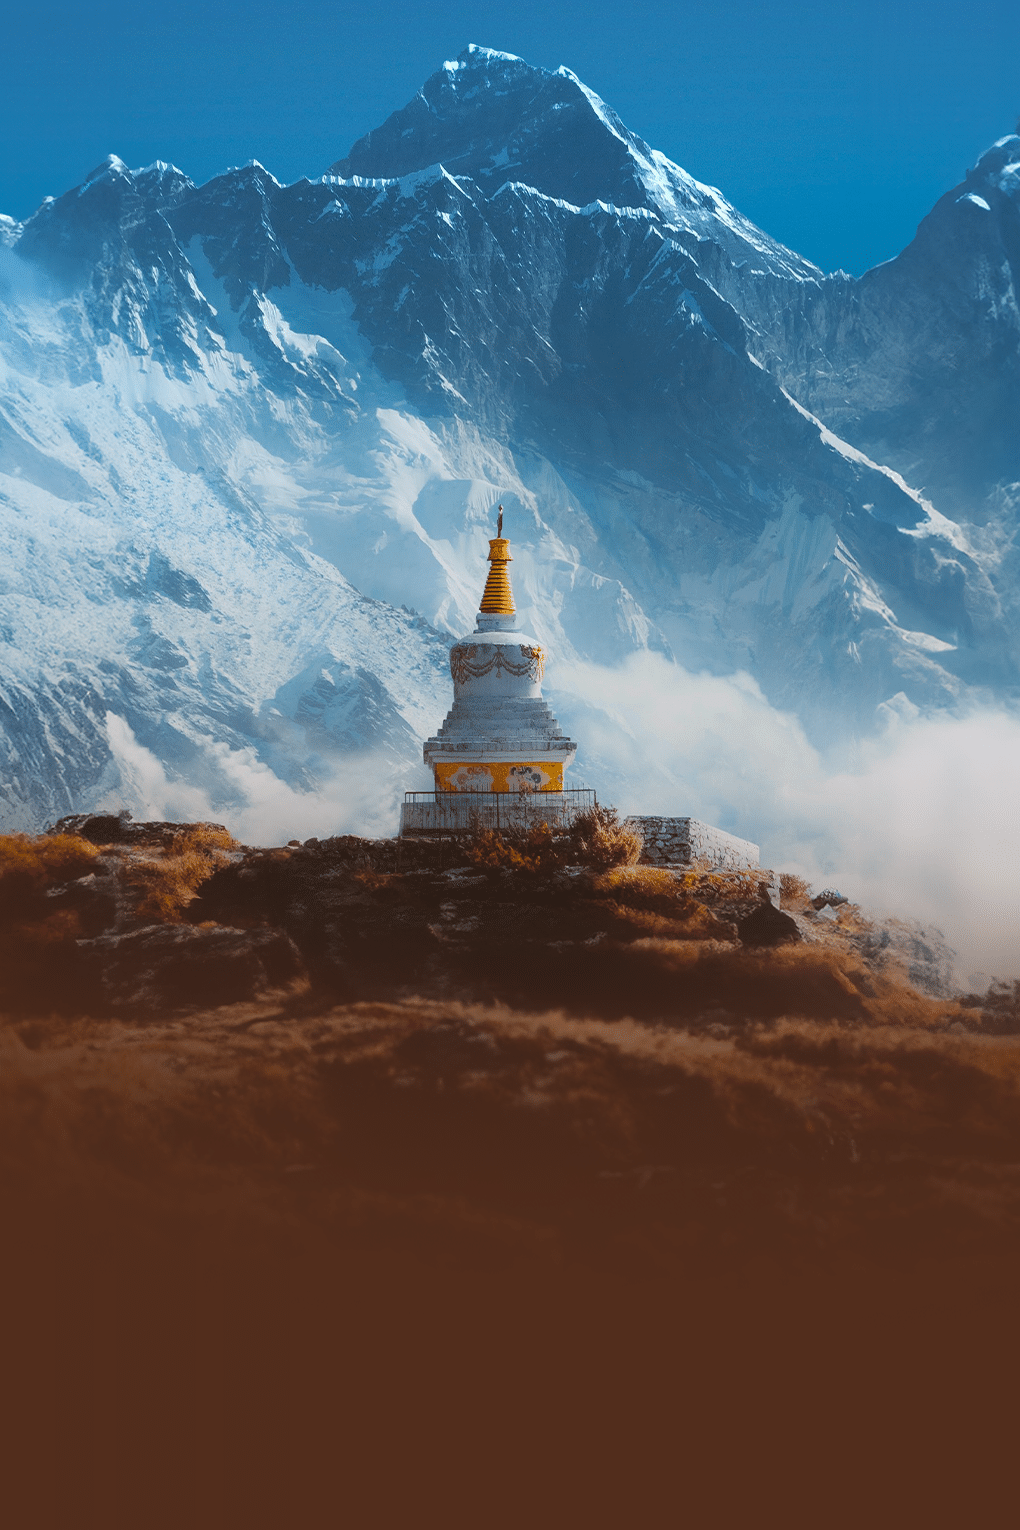 Discovering Nepal - Through a Spiritual Lens